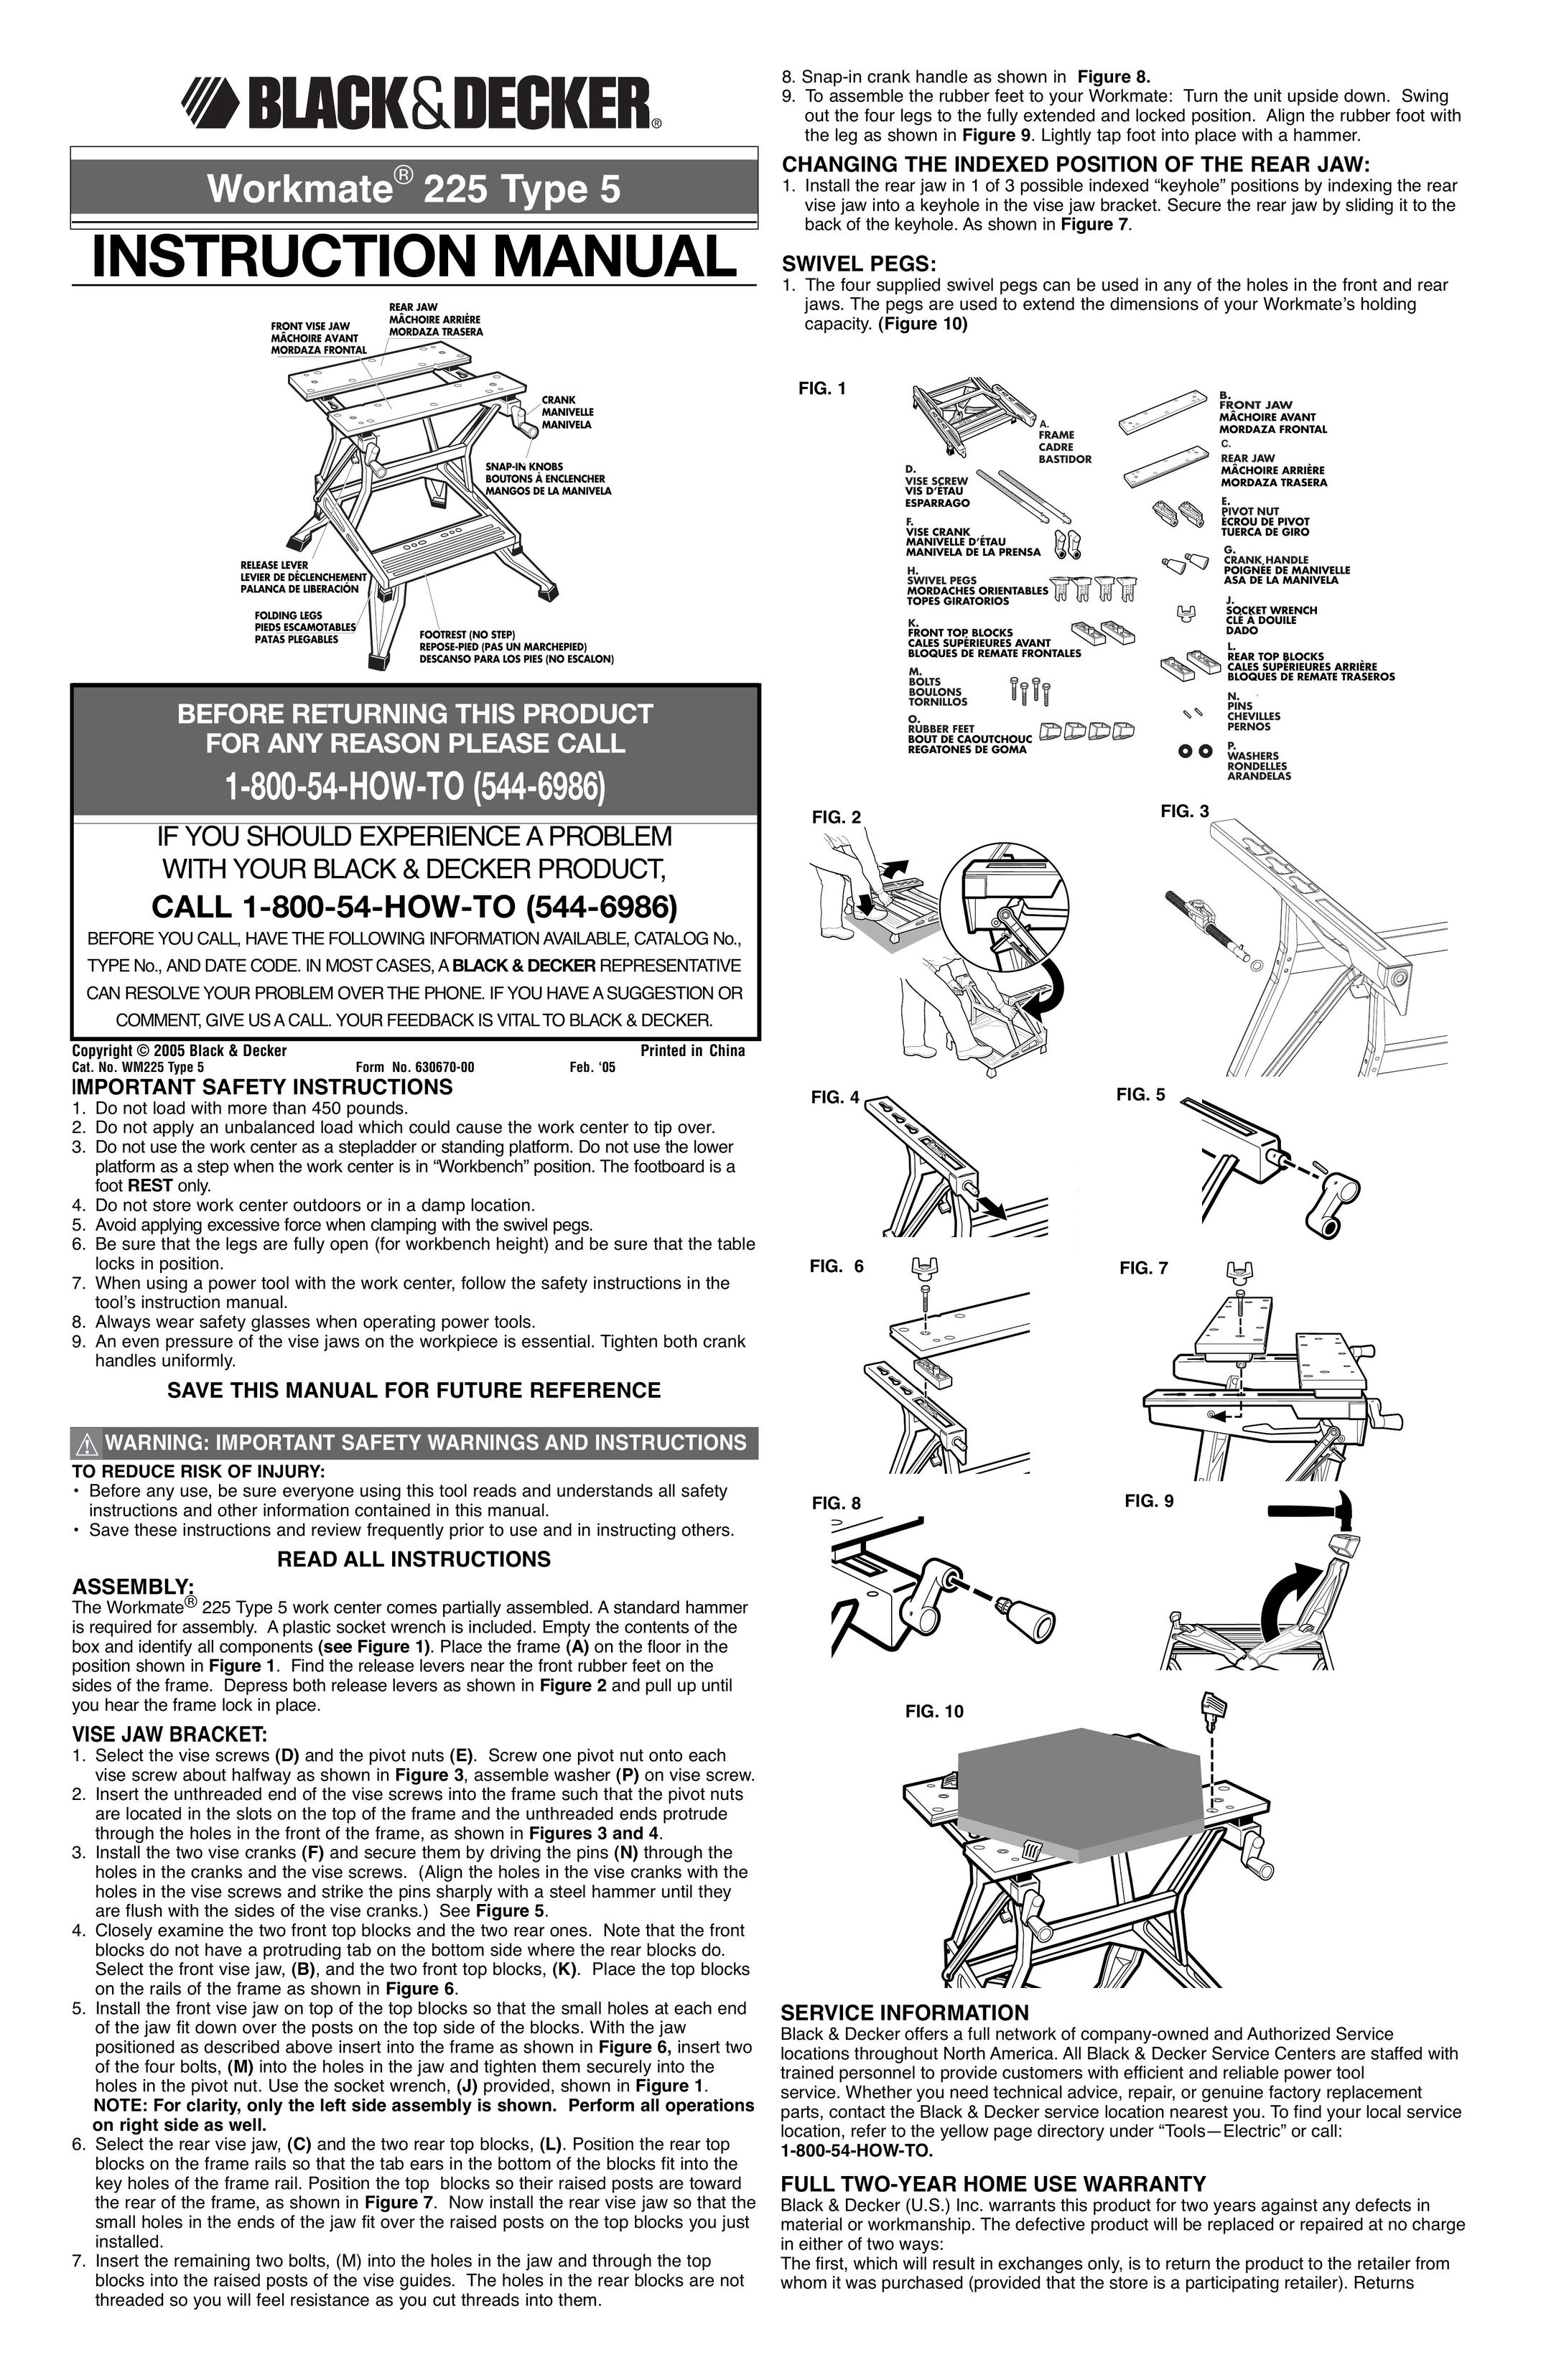 Black & Decker WM225 Type 5 Work Light User Manual